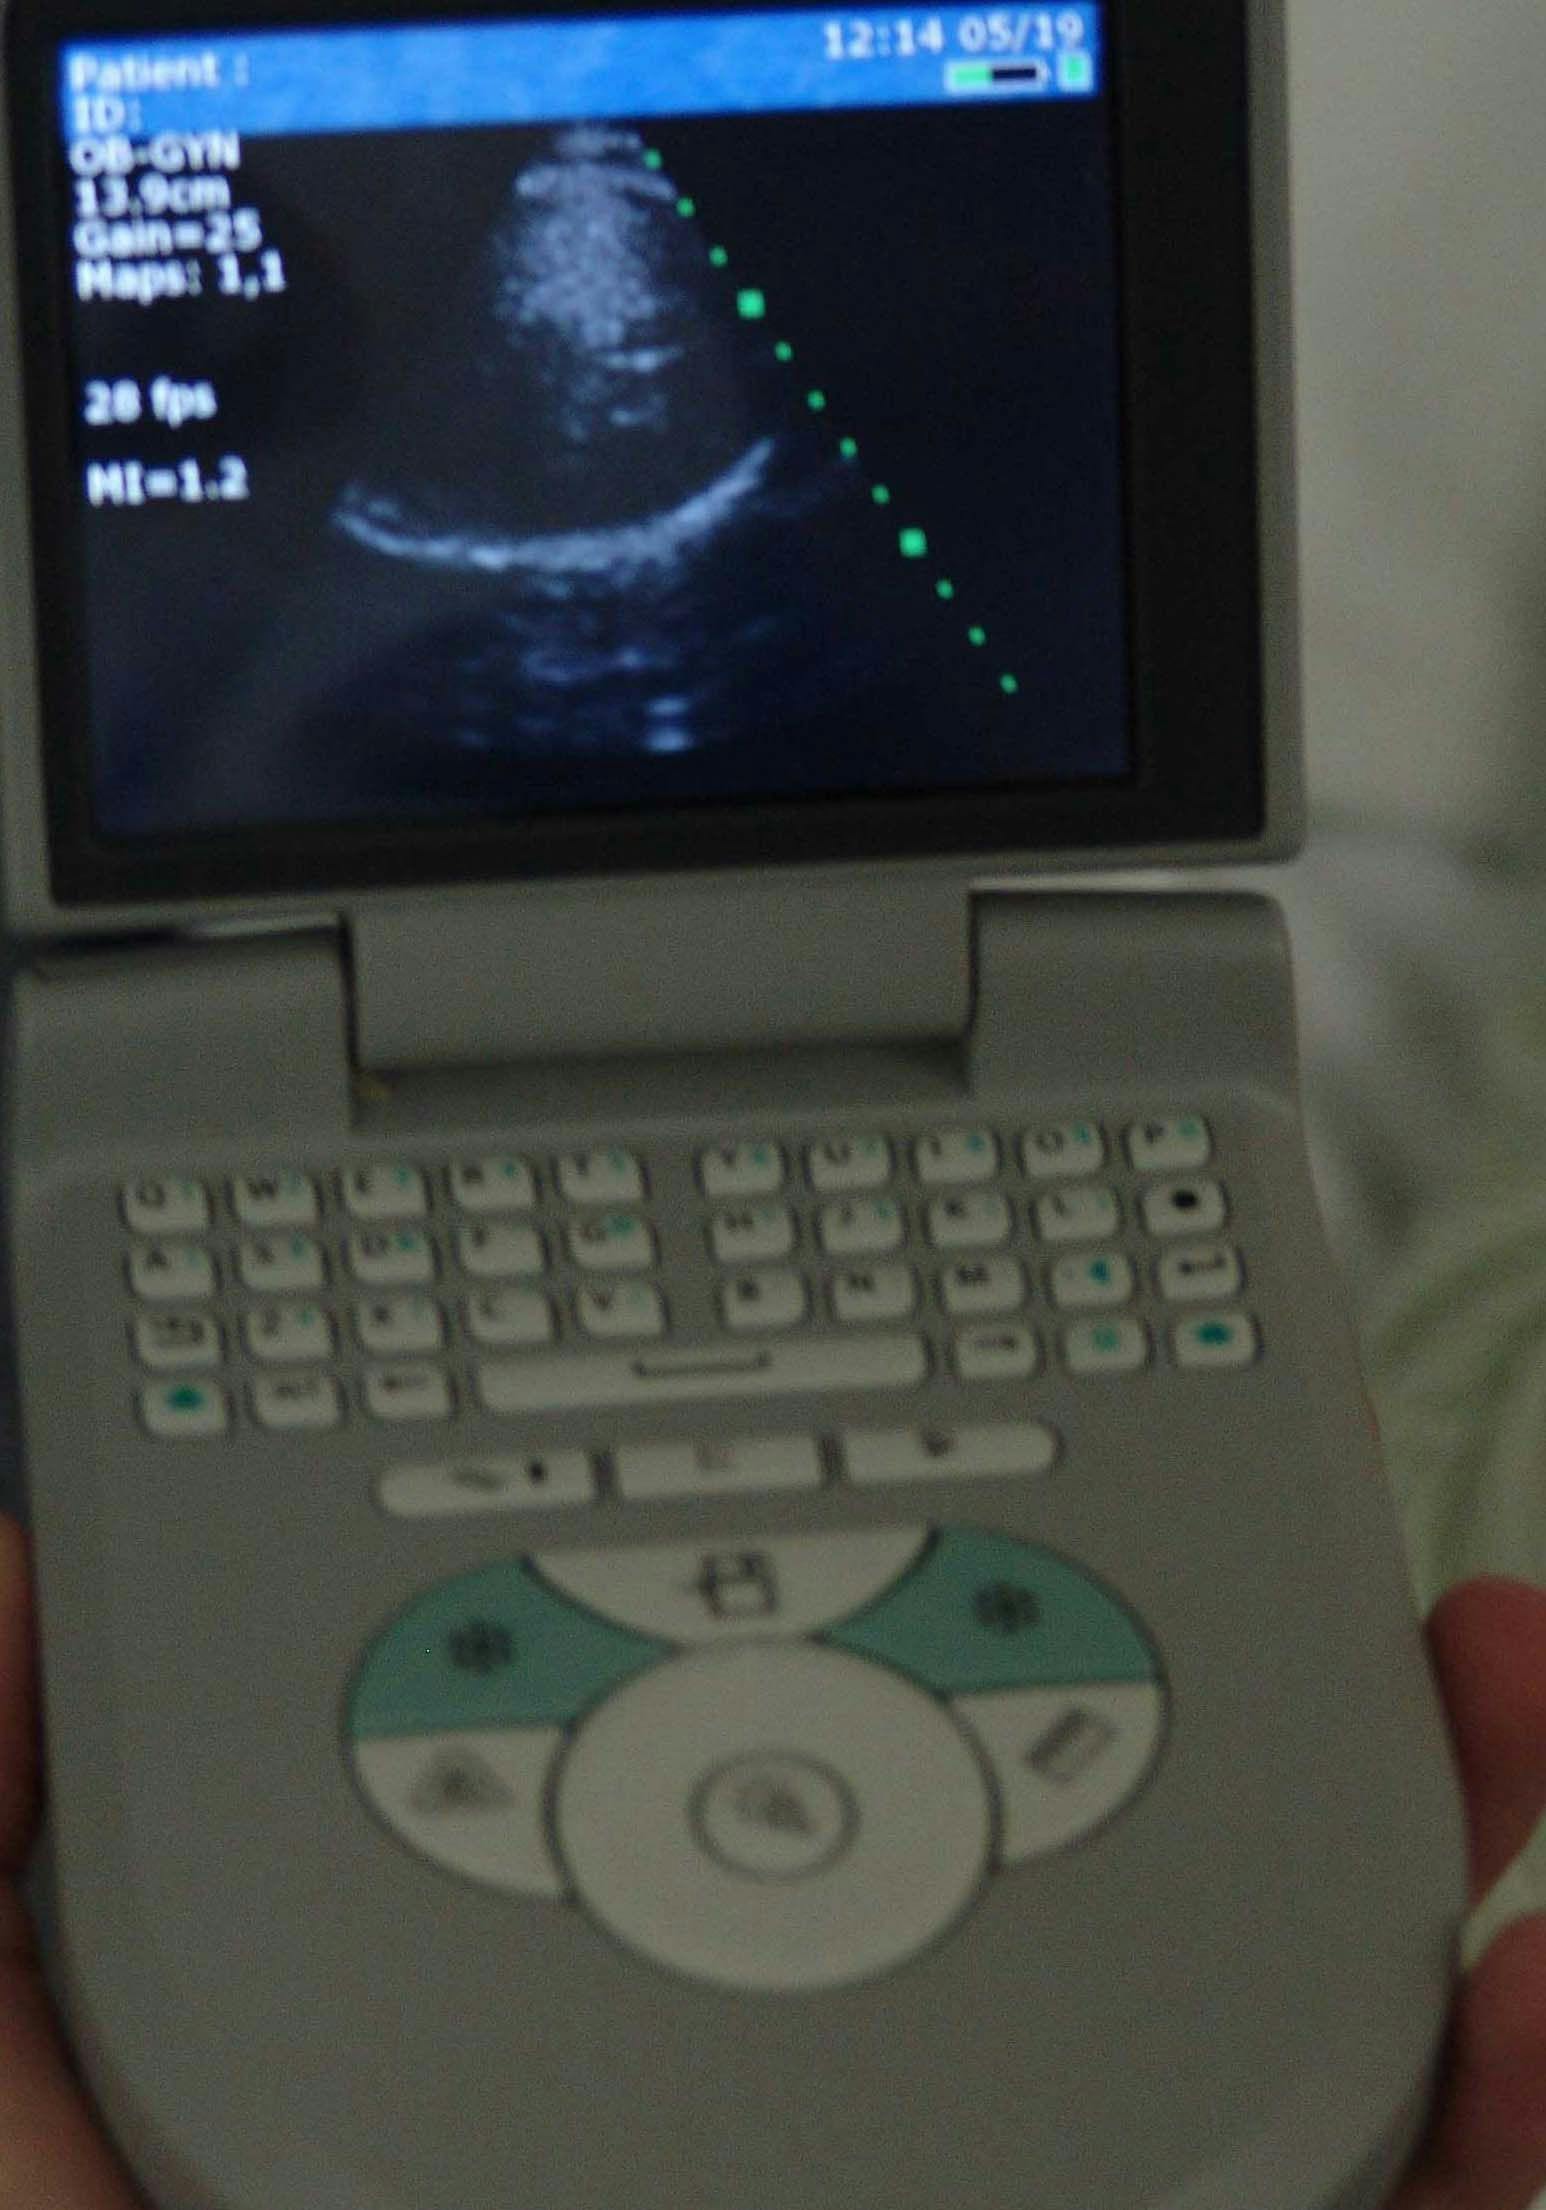 U.K. midwives take ultrasound into the community